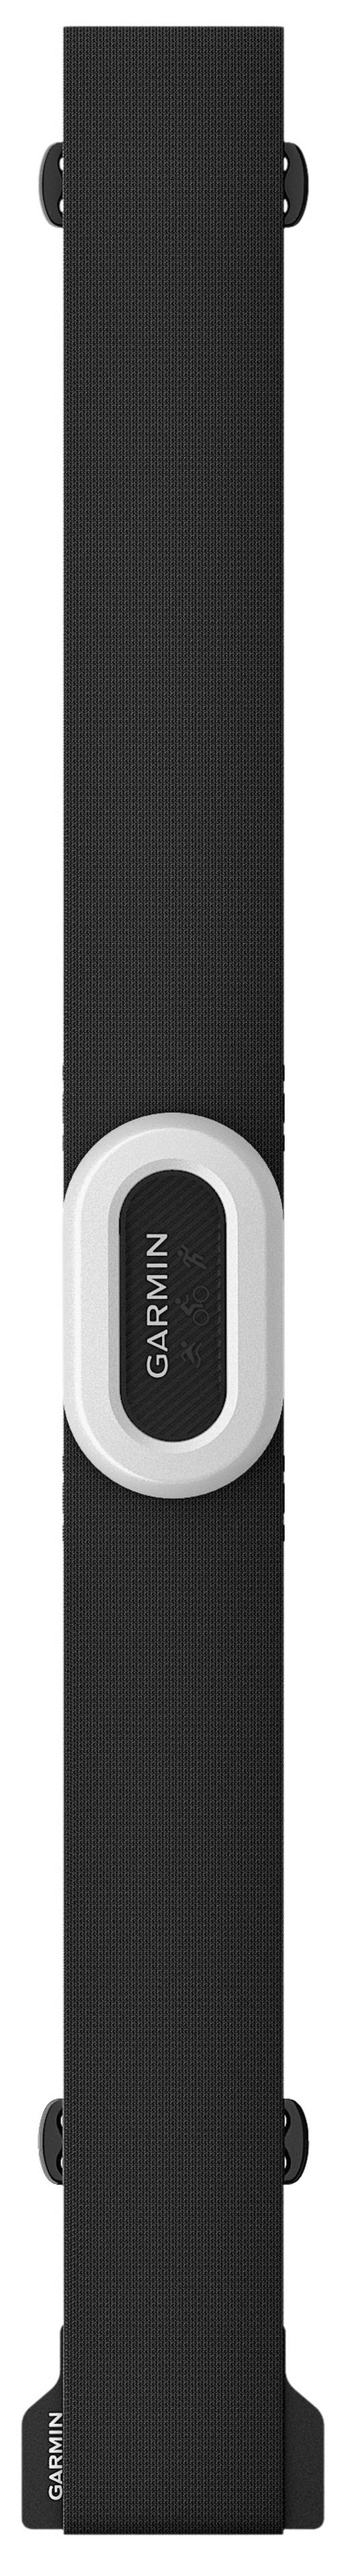 Garmin HRM-Pro Plus Heart Rate Monitor